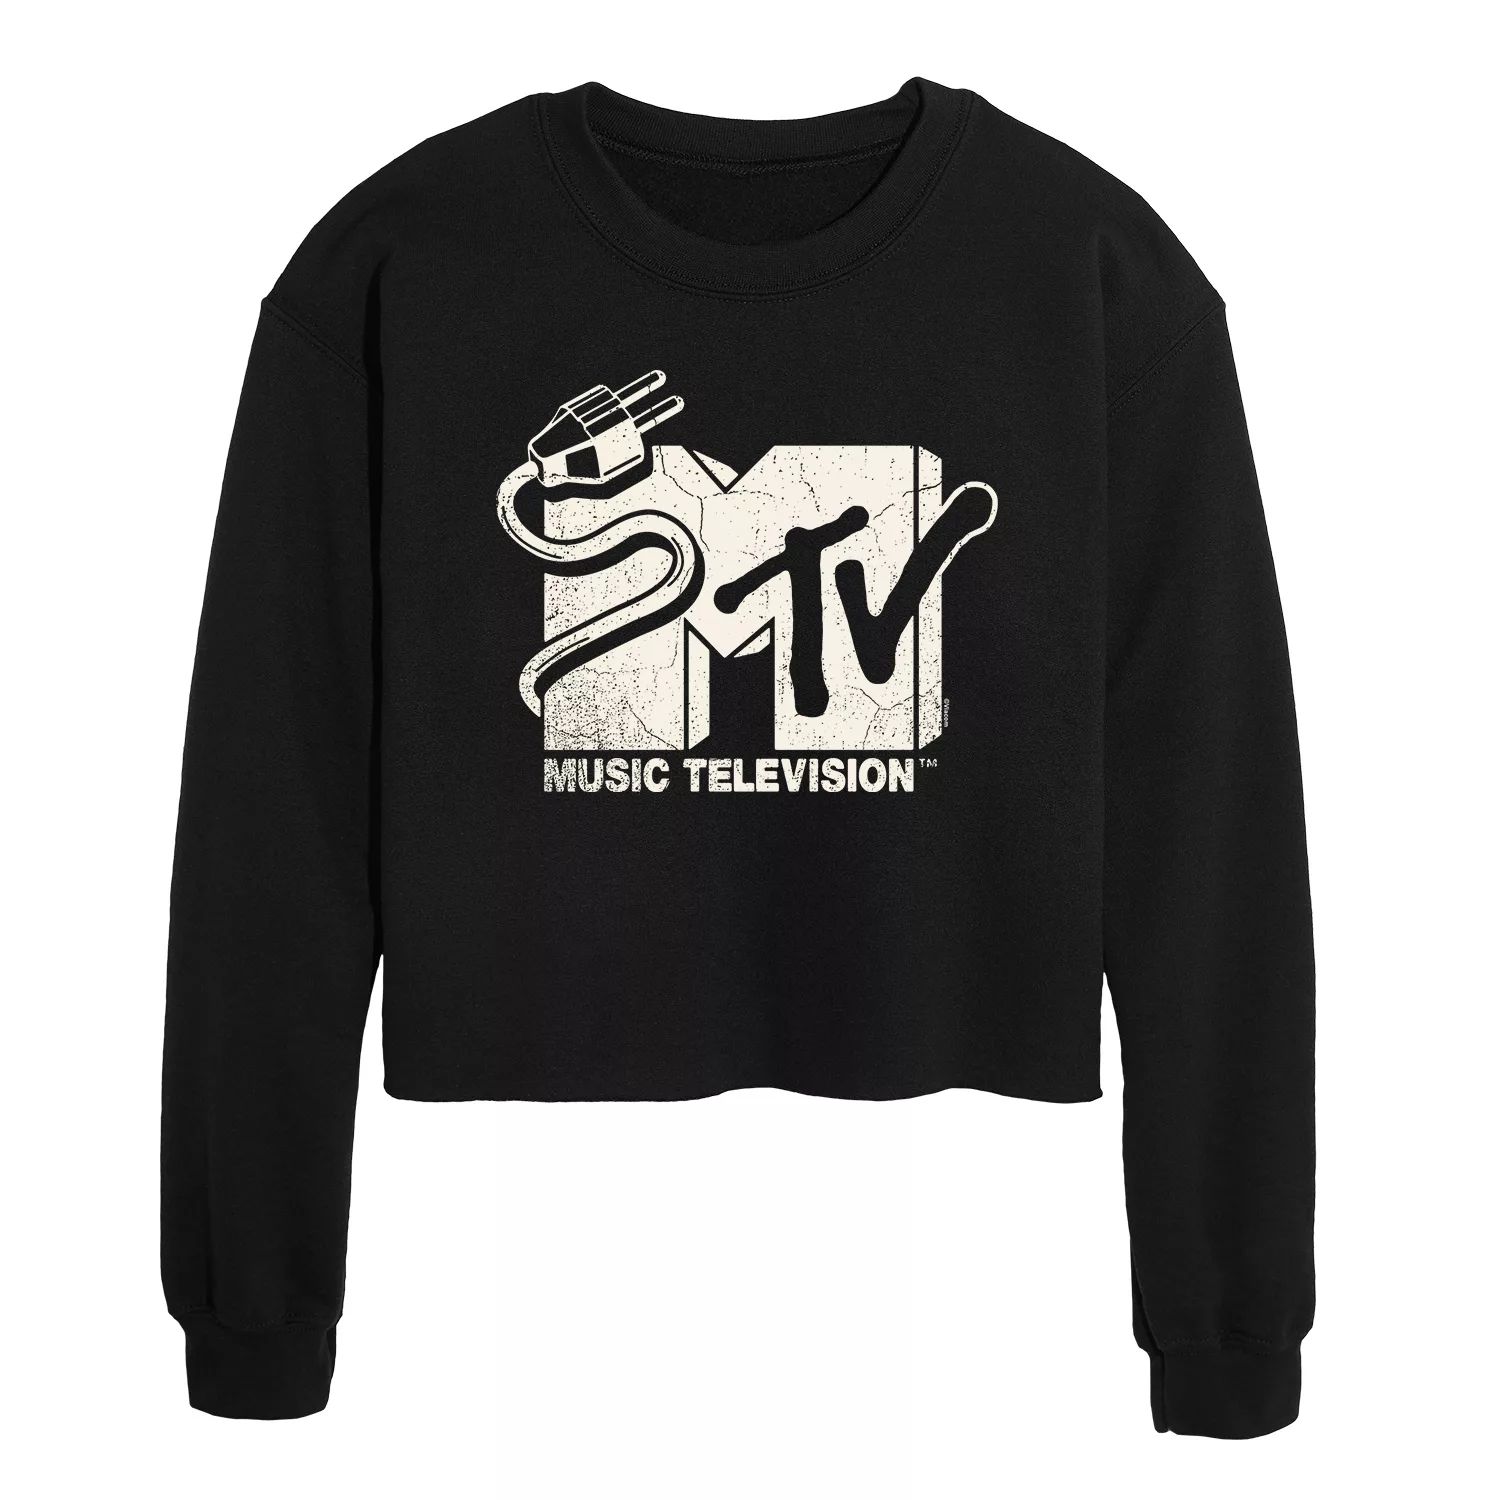 Укороченный свитшот с логотипом MTV Unplugged для юниоров Licensed Character, черный raabe max mtv unplugged